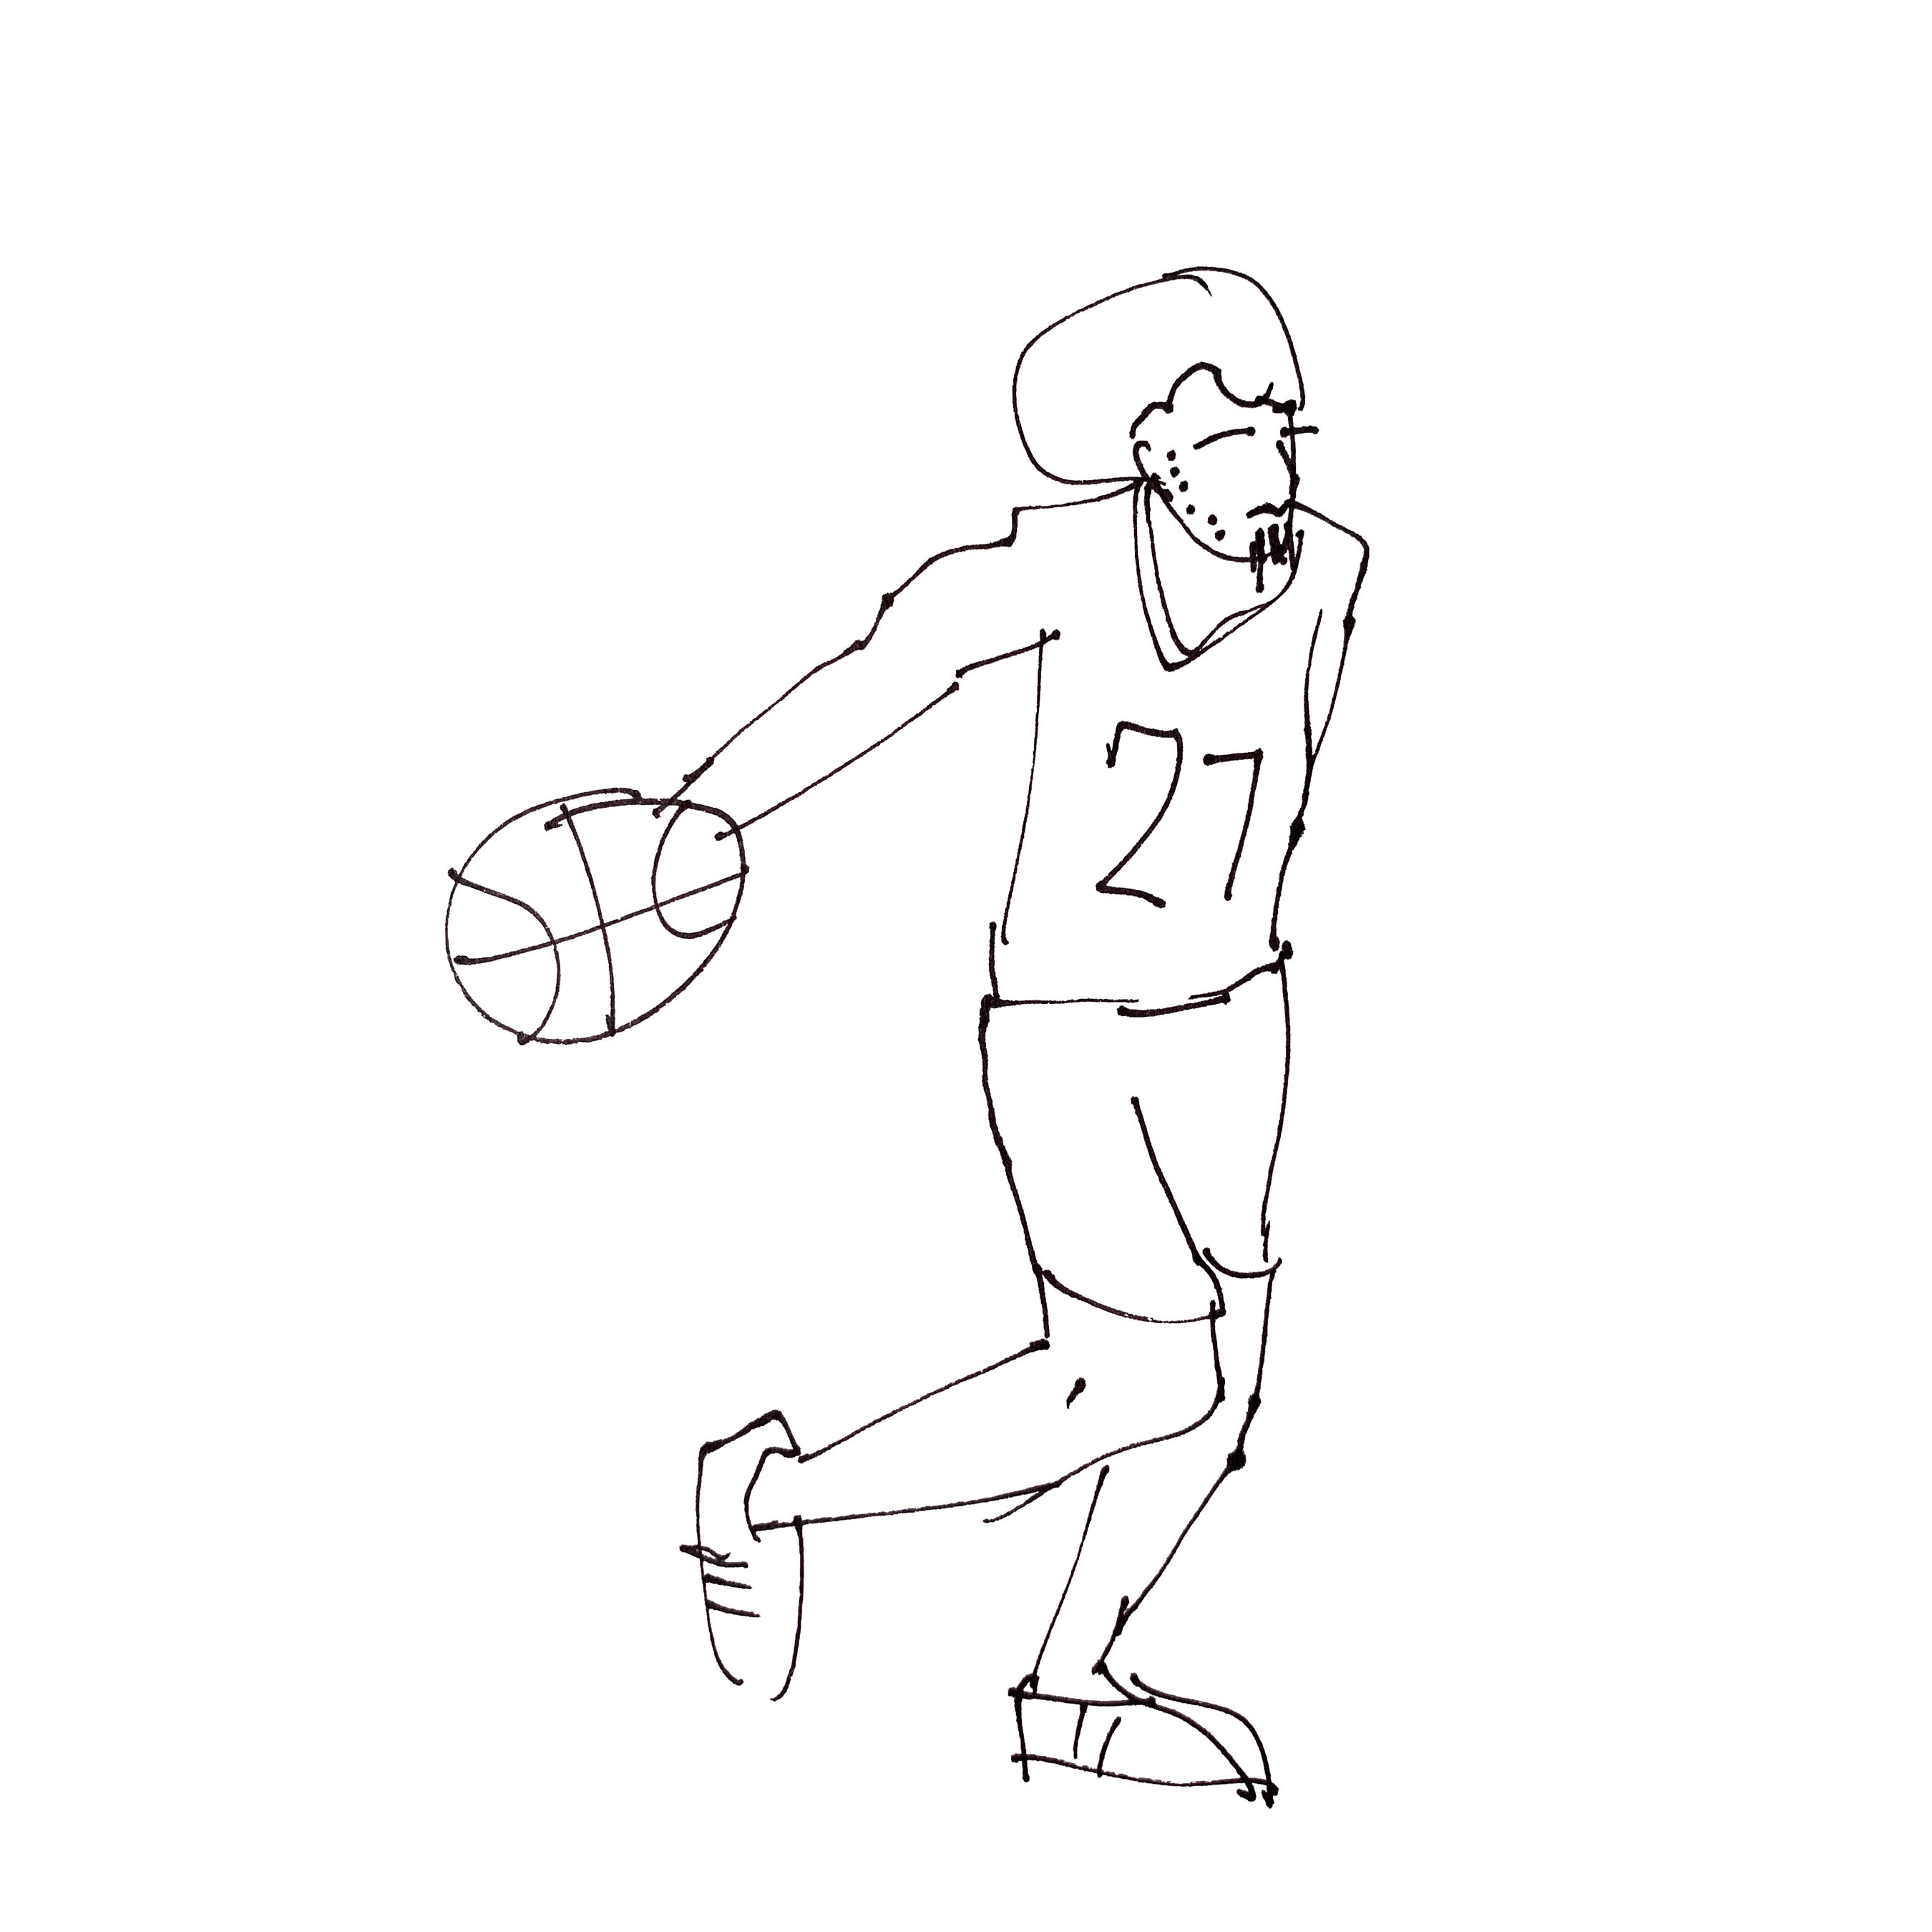 art every day number 601 / illustration sketch / basketball